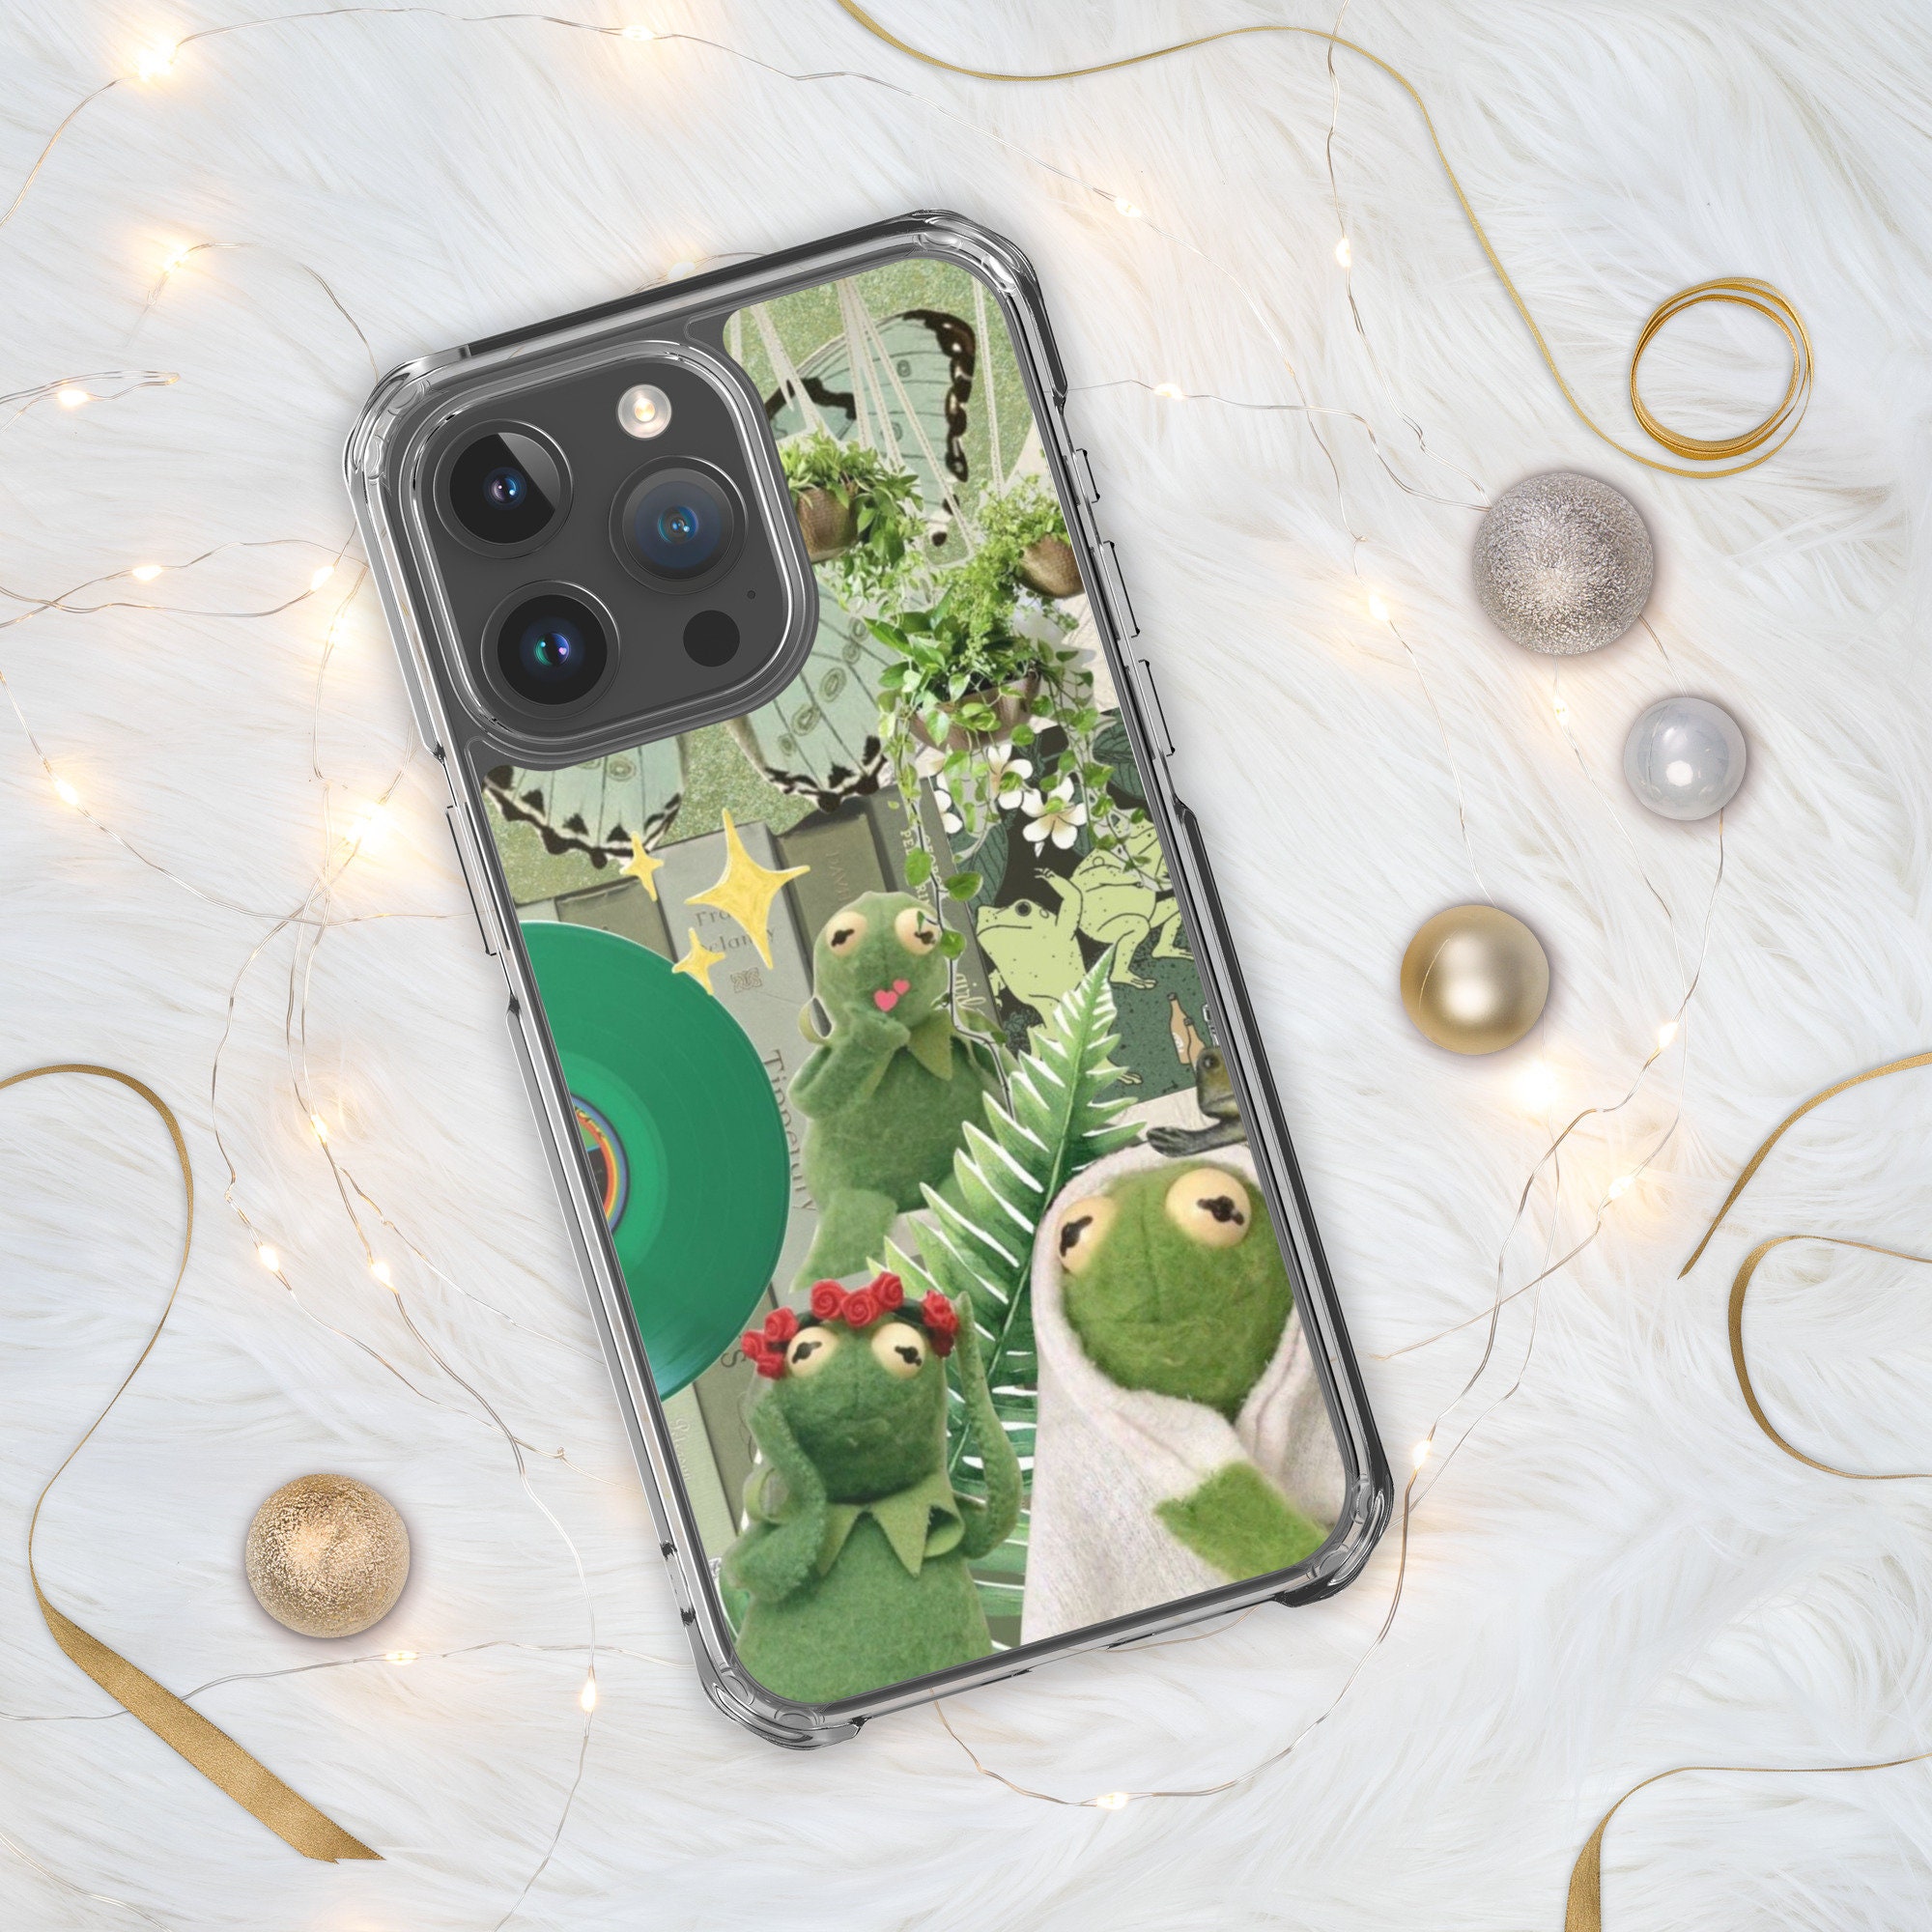 Case Kermit Supreme - iPhone 6 / Iphone 6s